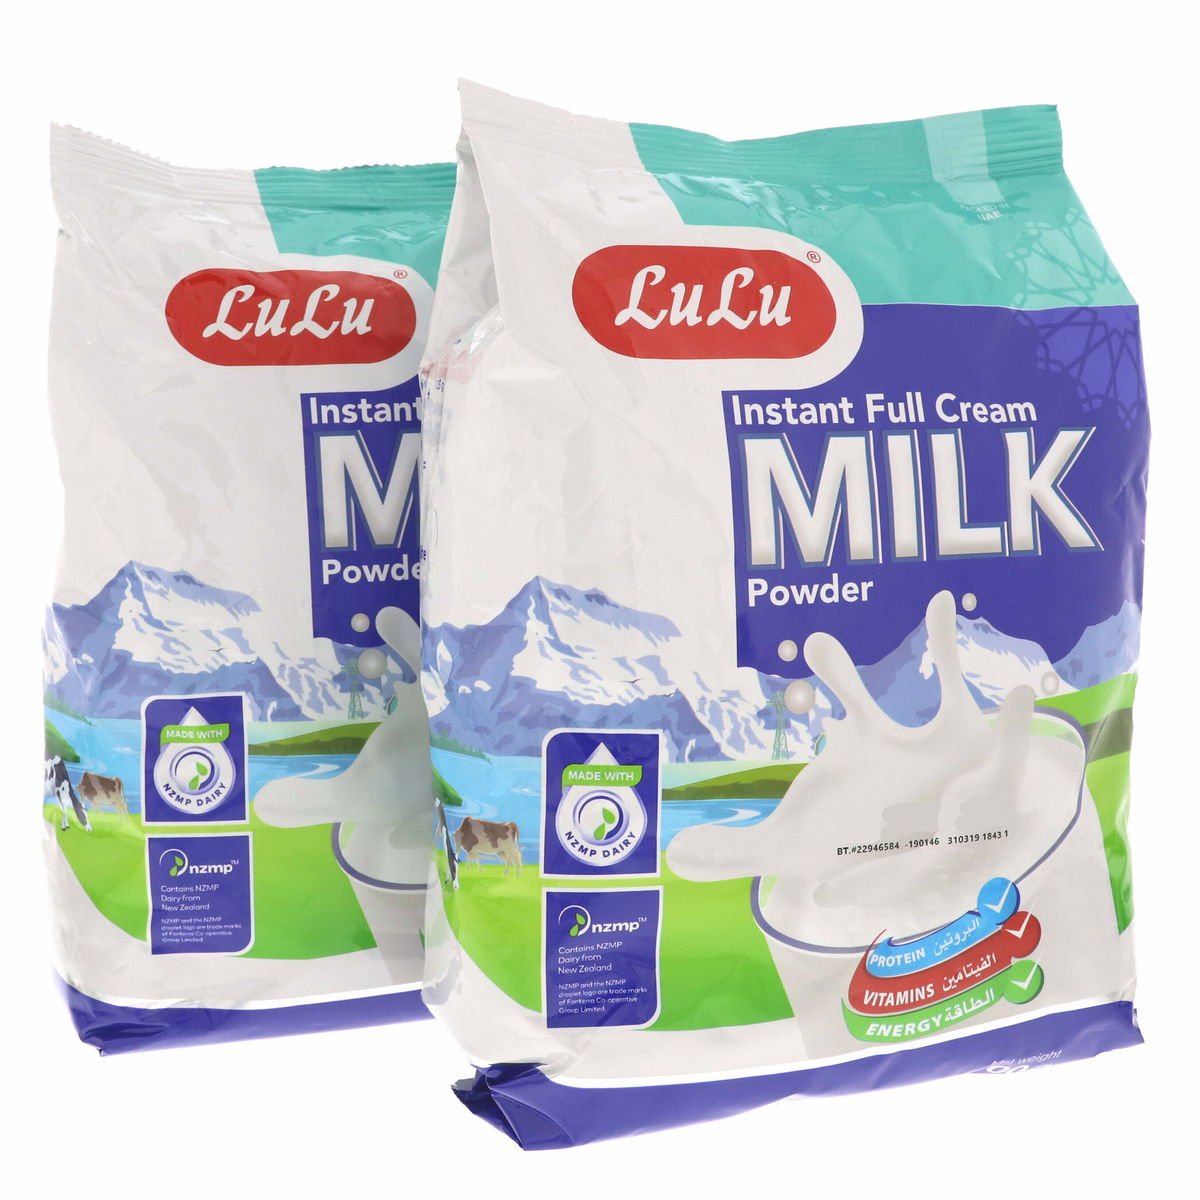 LuLu Instant Full Cream Milk Powder 2 x 900 g